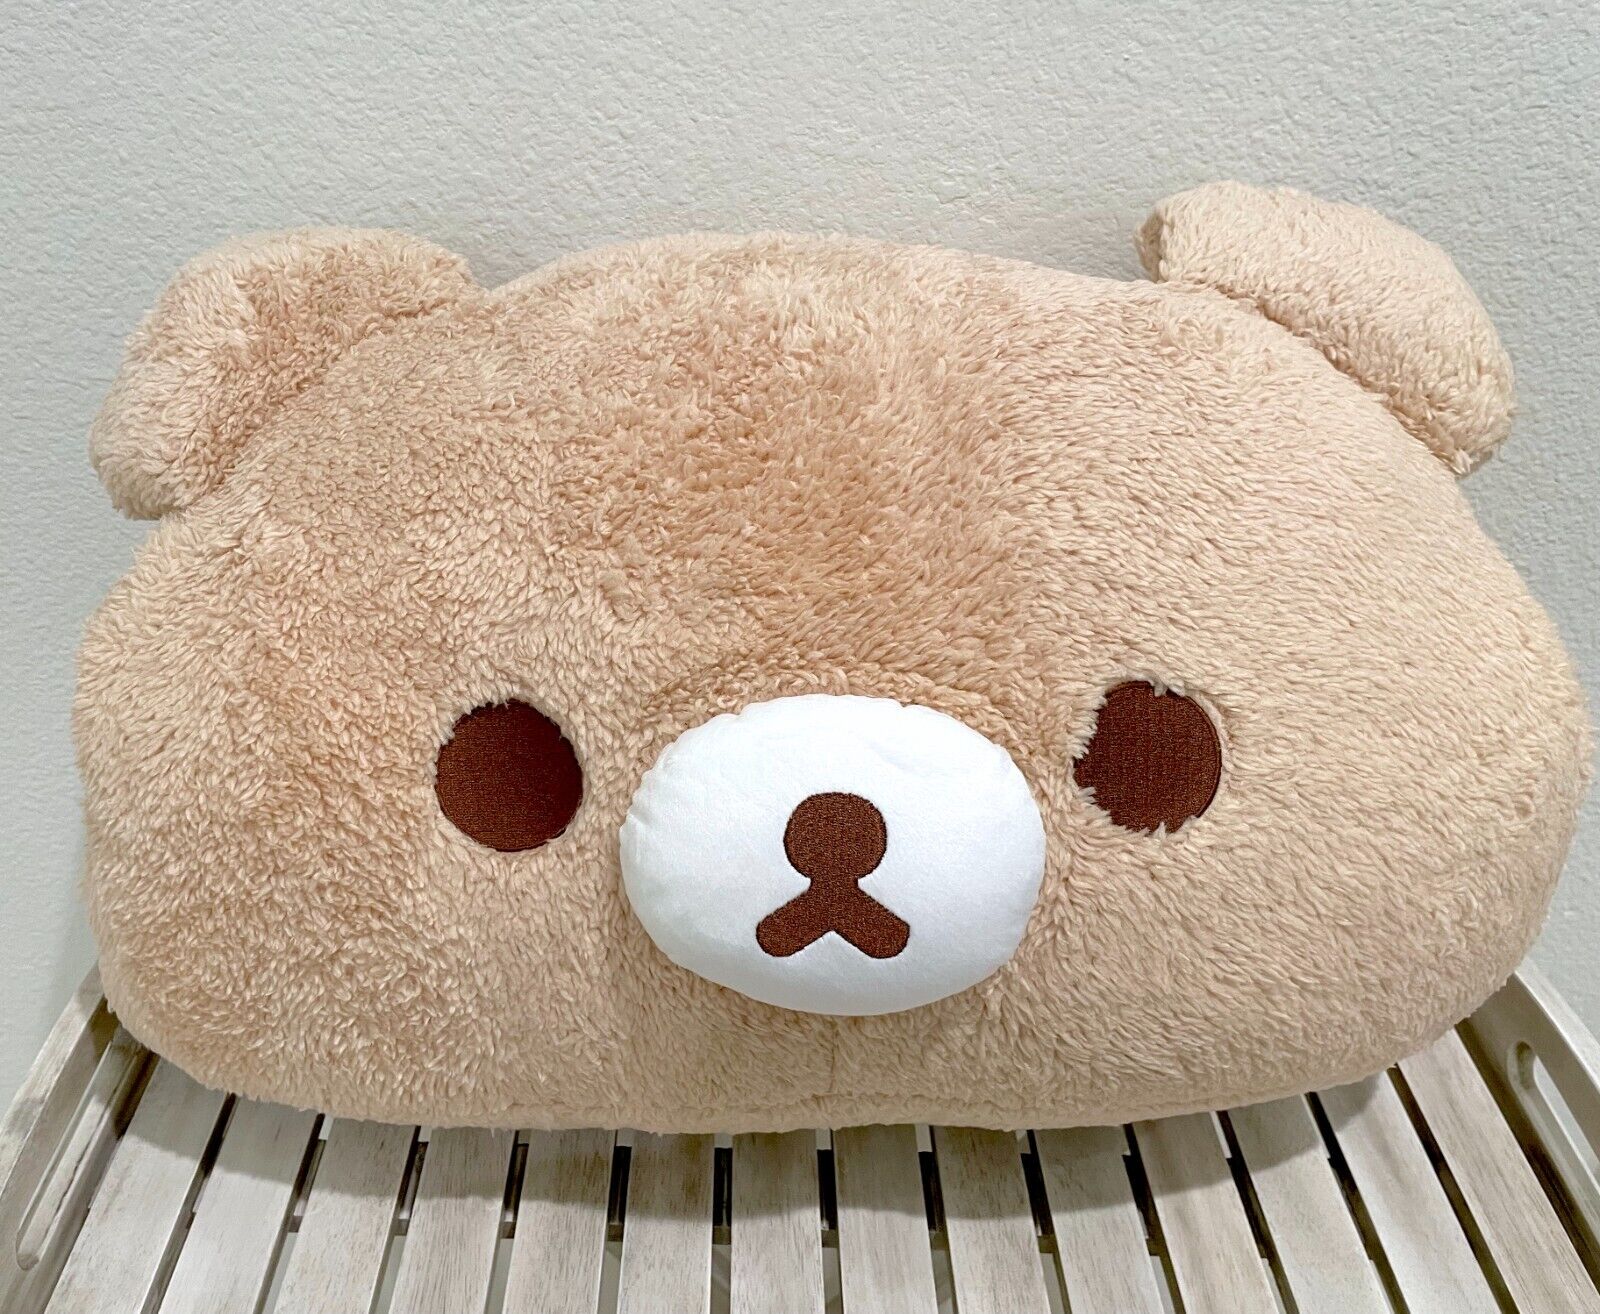  NEW XL Rilakkuma Dome Style Cushion / Pillow / Plush Premium Brown Bear - Japan